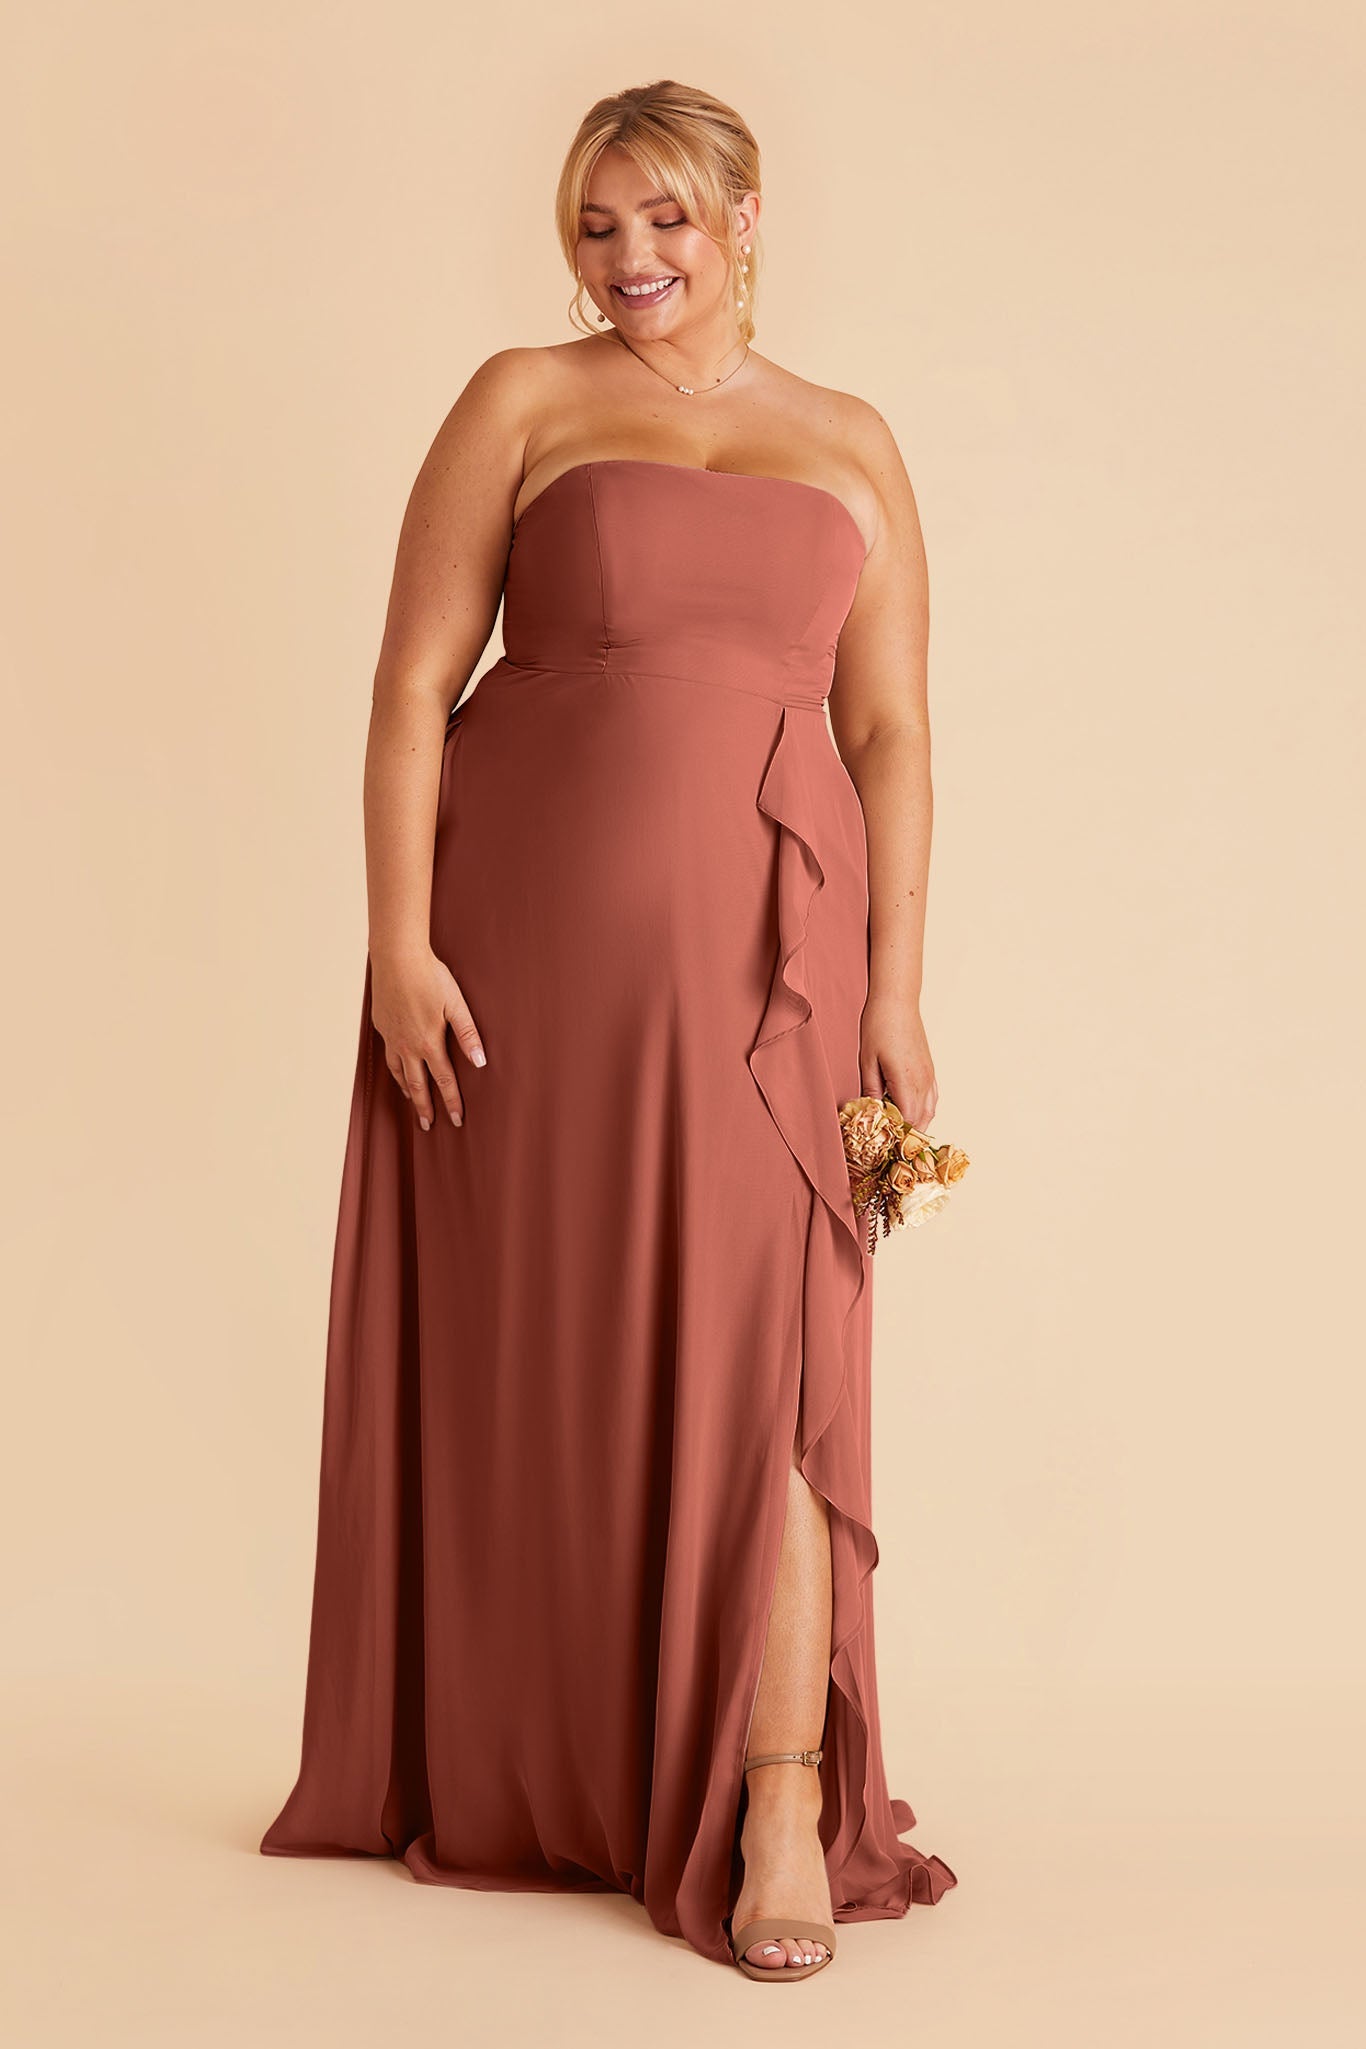 Desert Rose Winnie Convertible Chiffon Dress by Birdy Grey